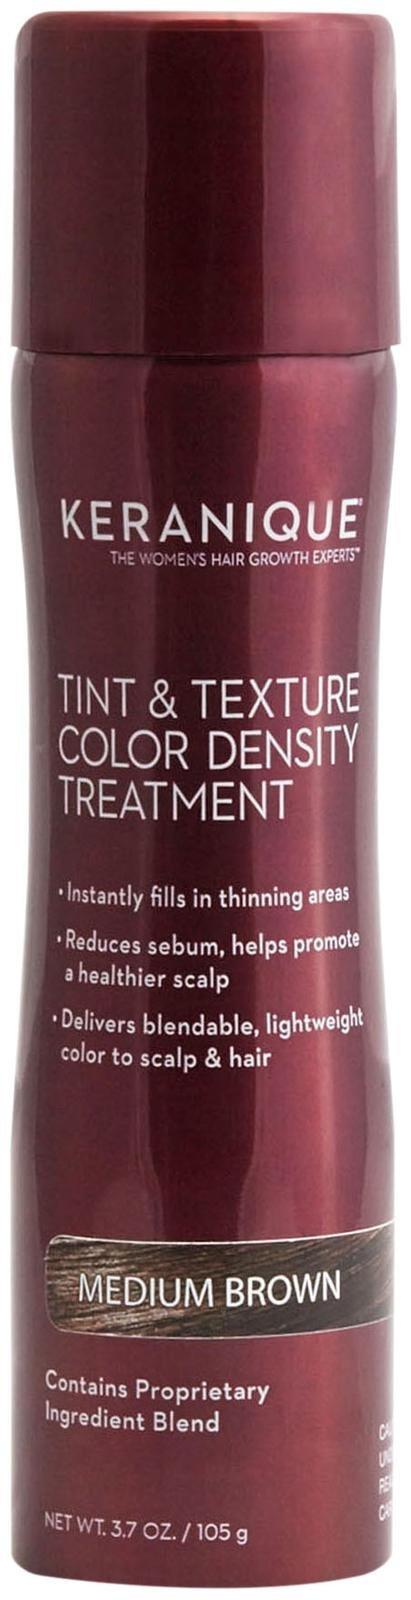 Keranique Tint & Texture Treatment Spray - Medium Brown - 3.7 Oz